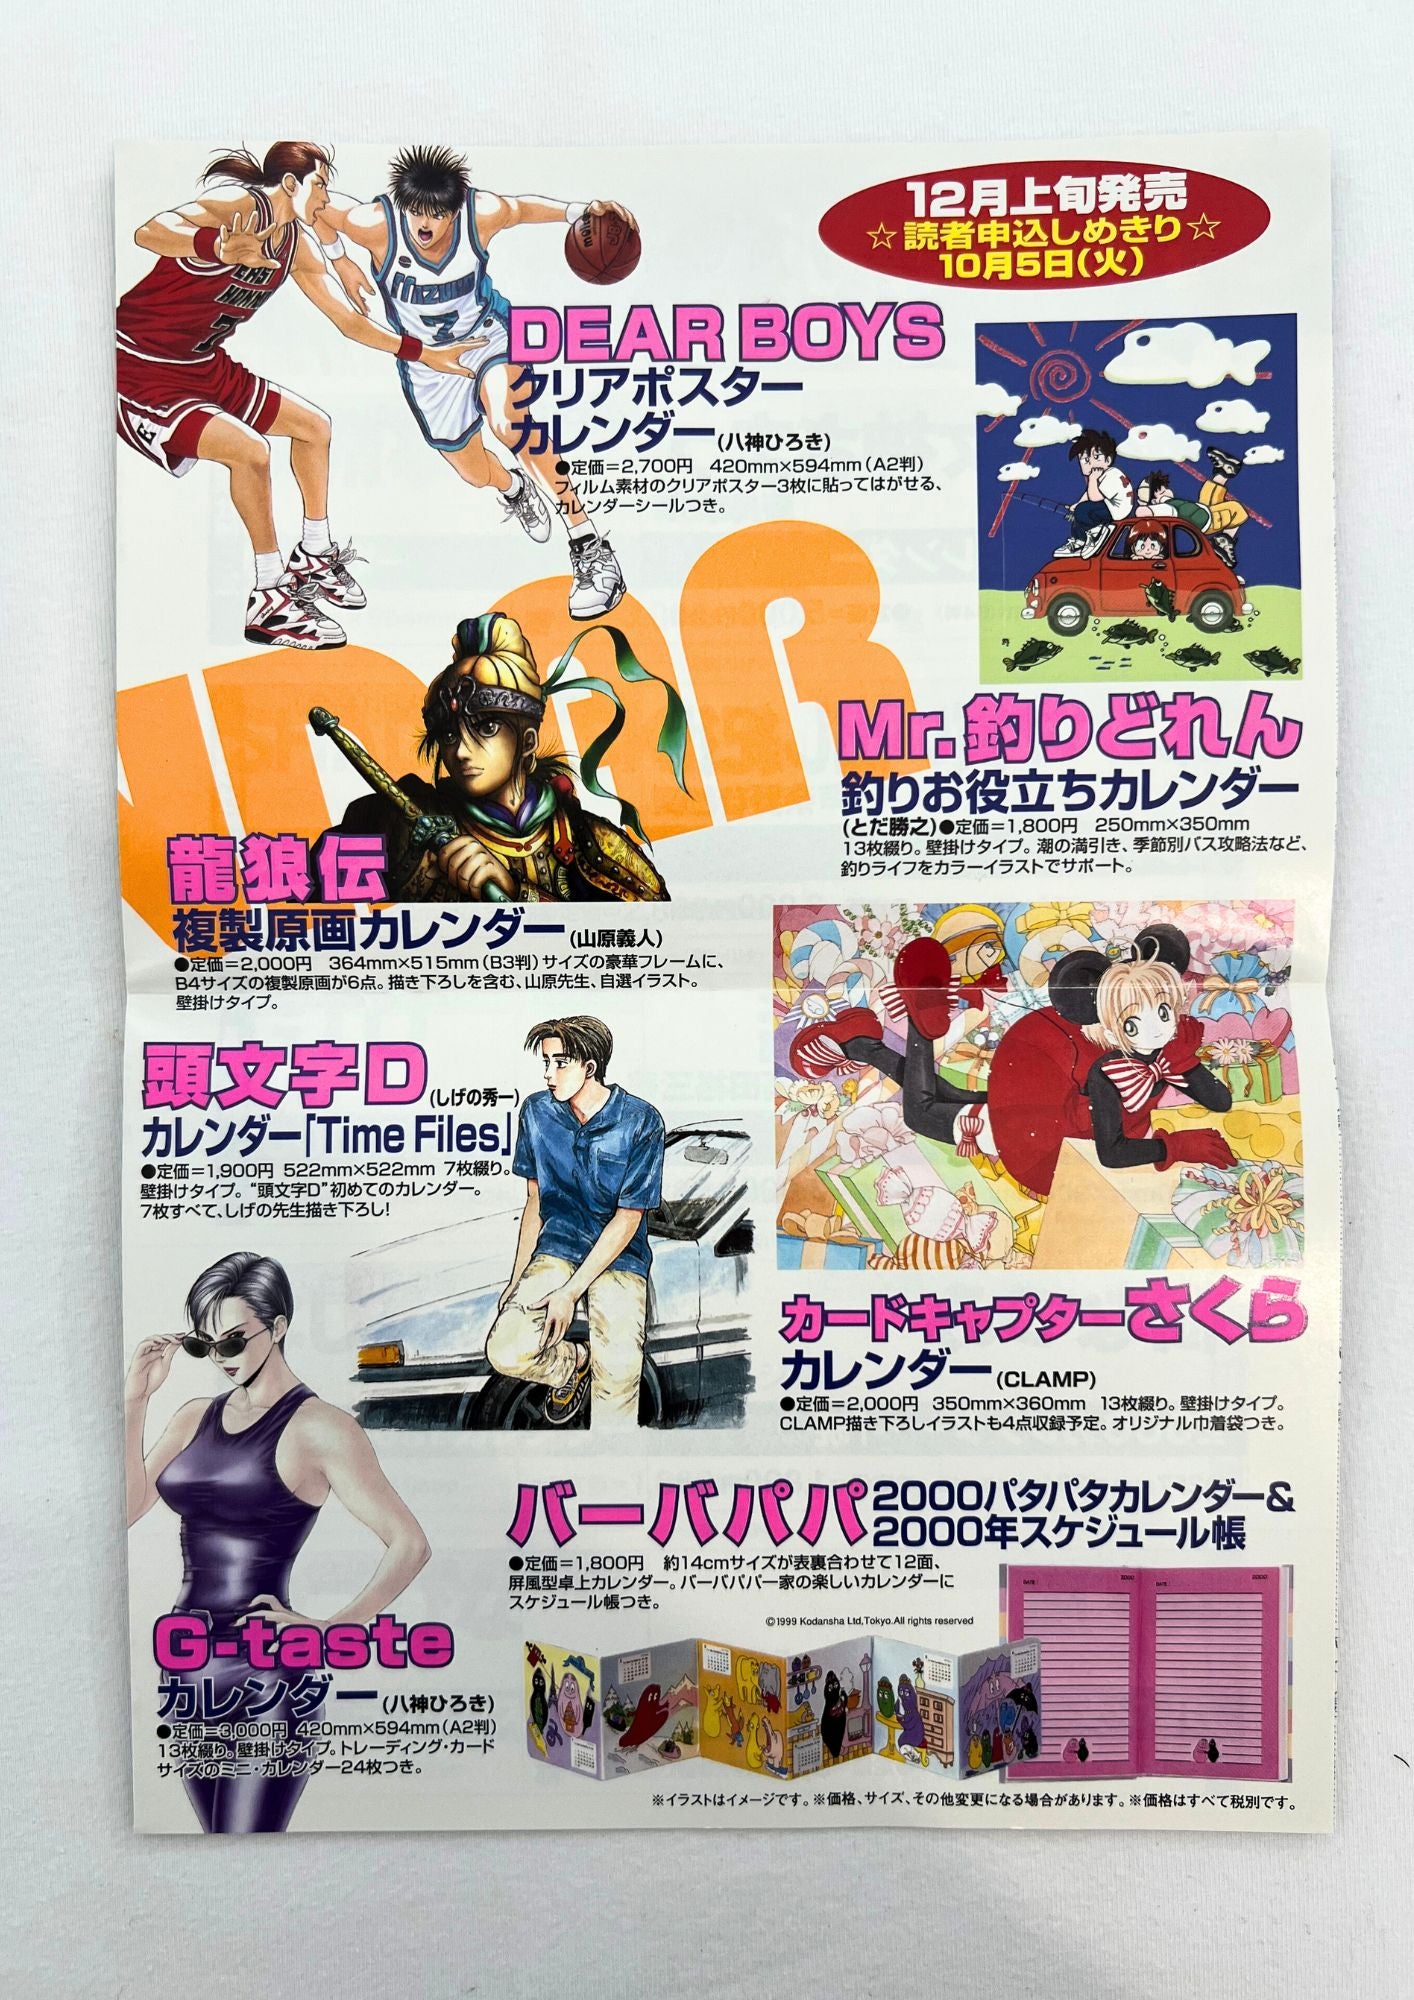 1999 Vintage AKIRA Official Young Magazine Vol.5 Manga Cover T-shirt / 1990 AKIRA Japanese Manga Vol. 5 1st Printing Issued Set